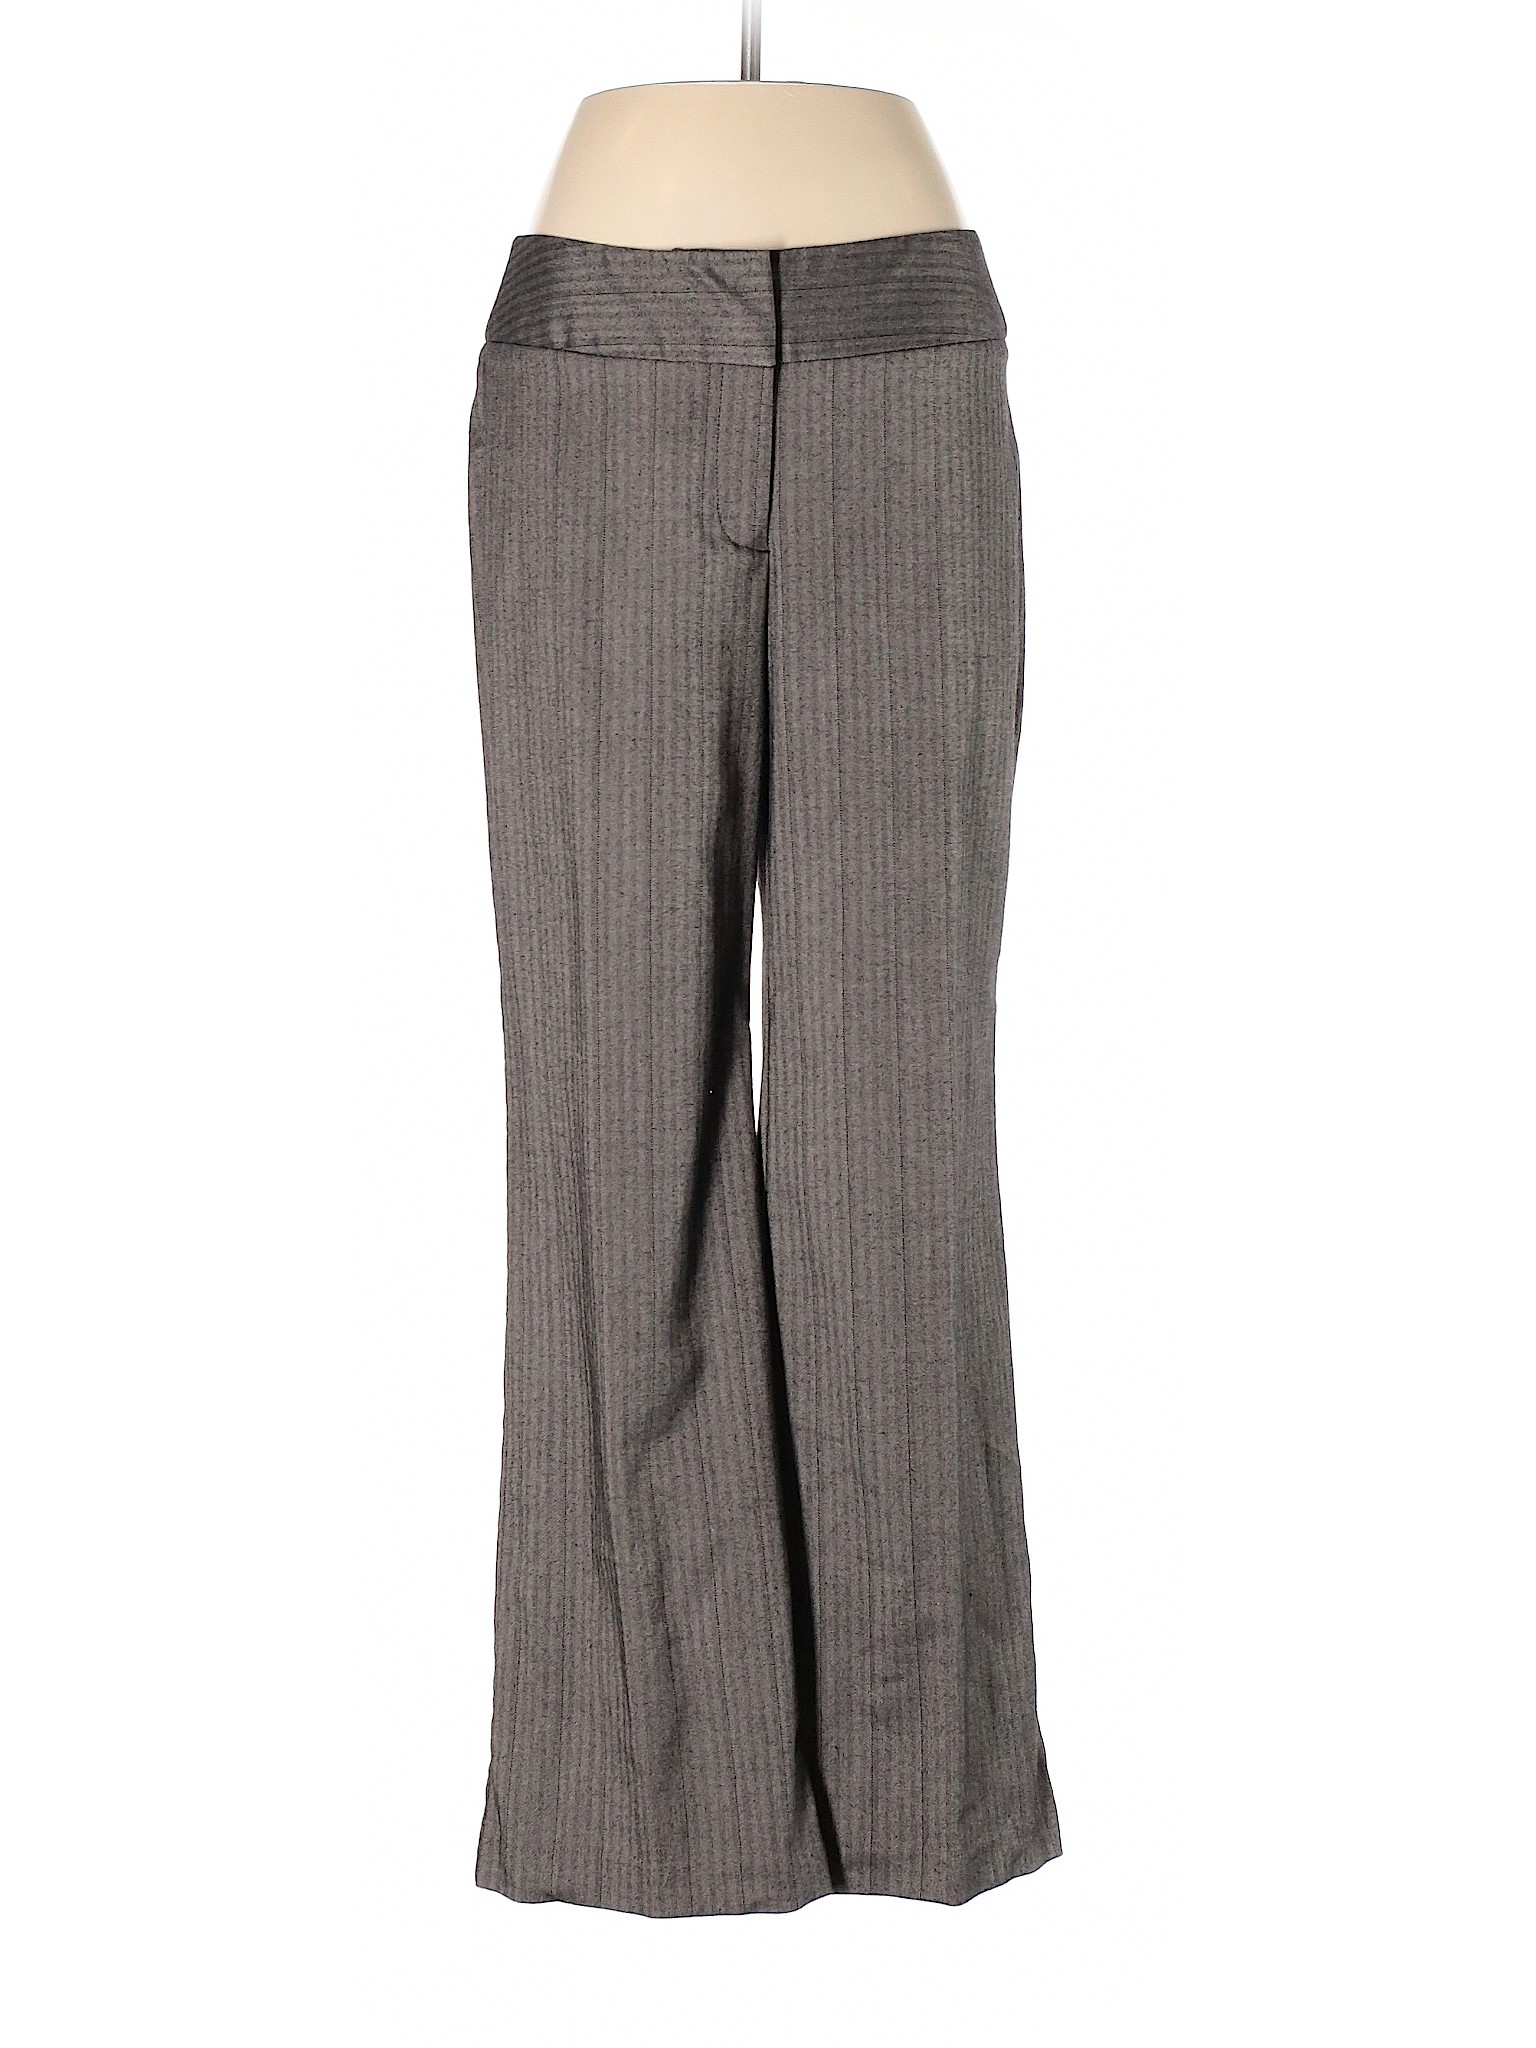 Chico's Women Gray Dress Pants M | eBay